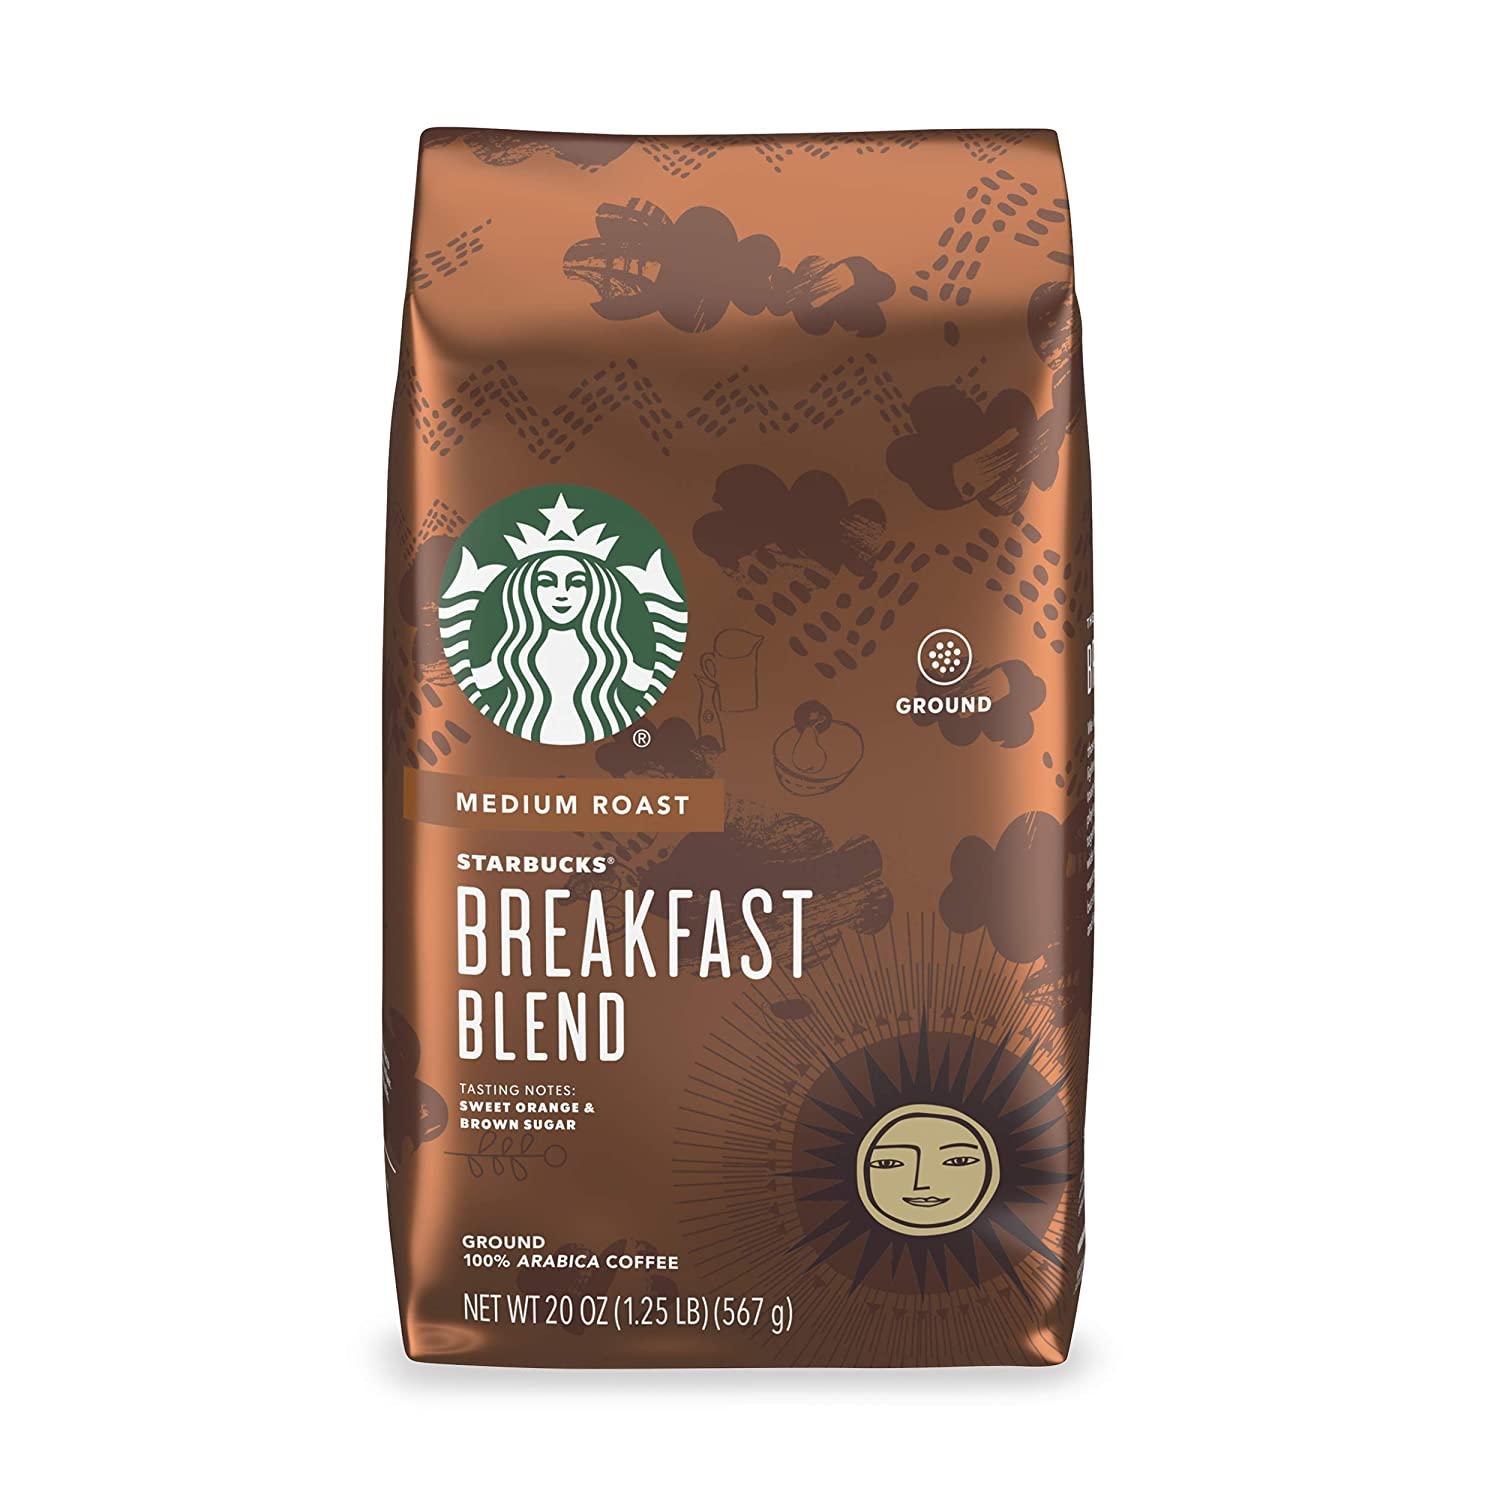 20oz Starbucks Breakfast Blend Ground Coffee for $7.78 Shipped